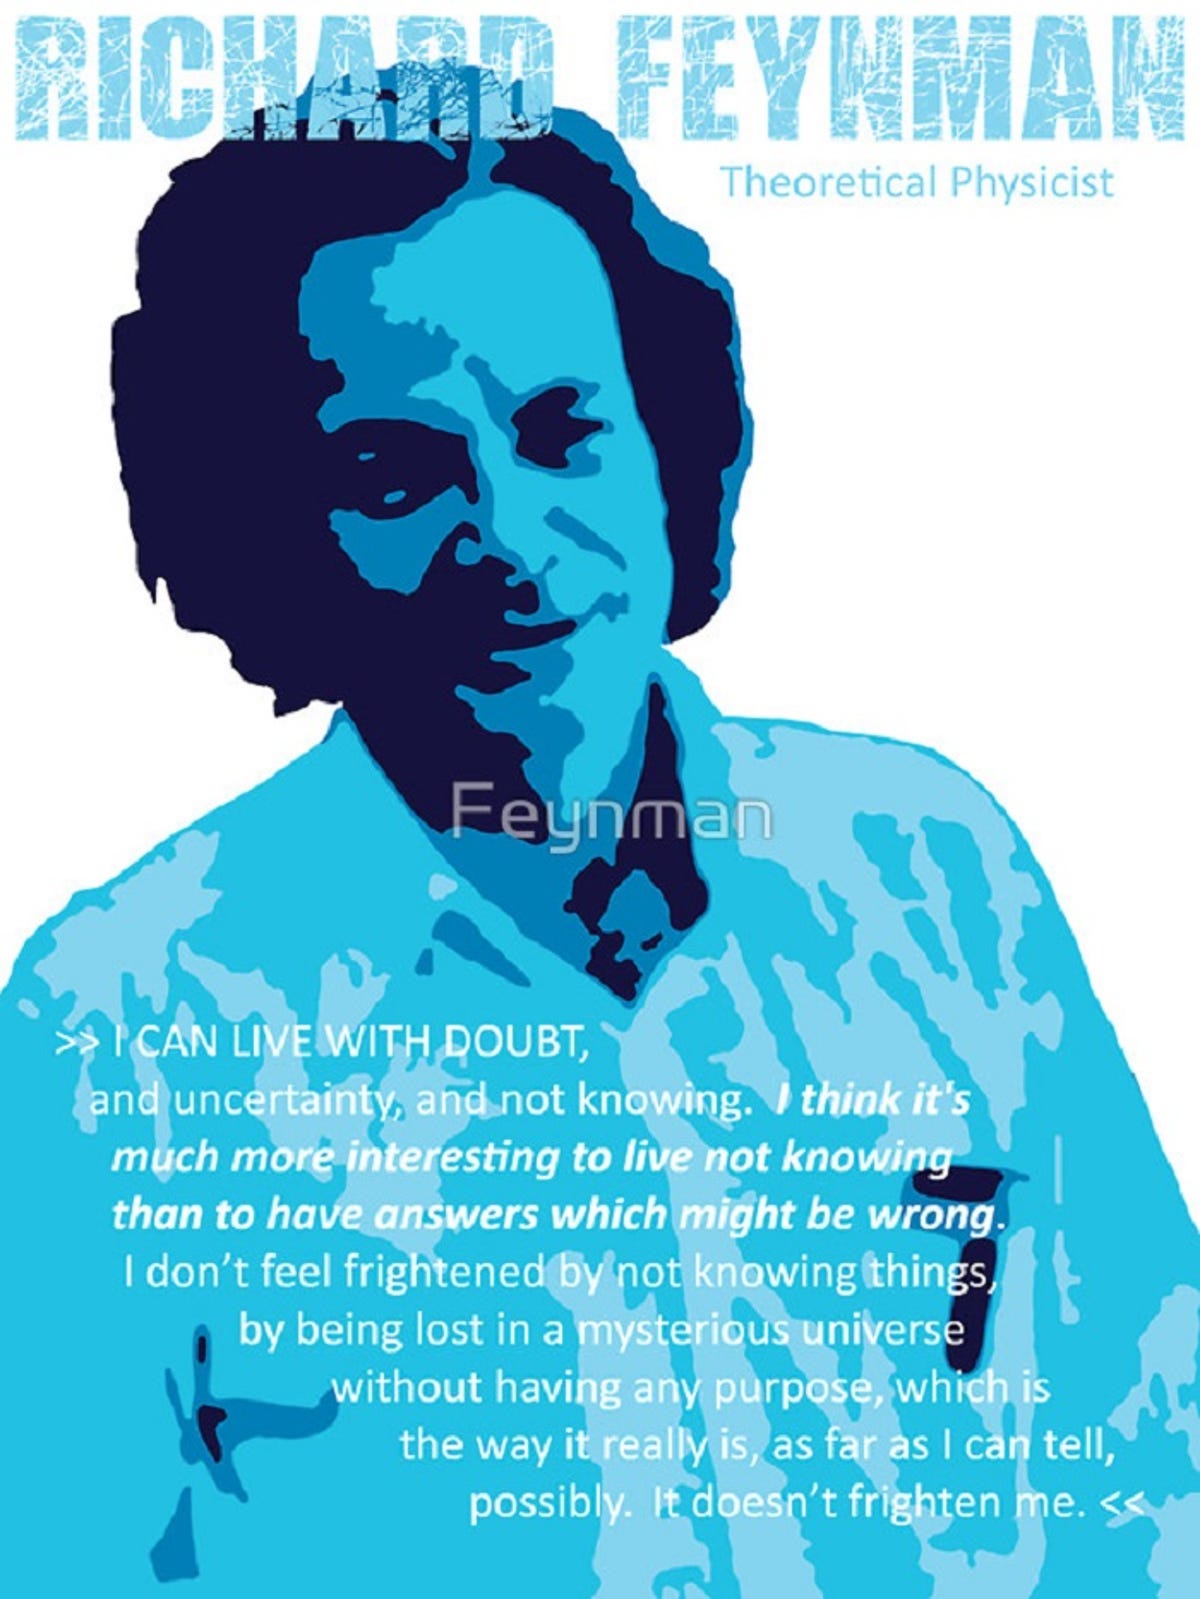 laptopstickersfeynman.jpg